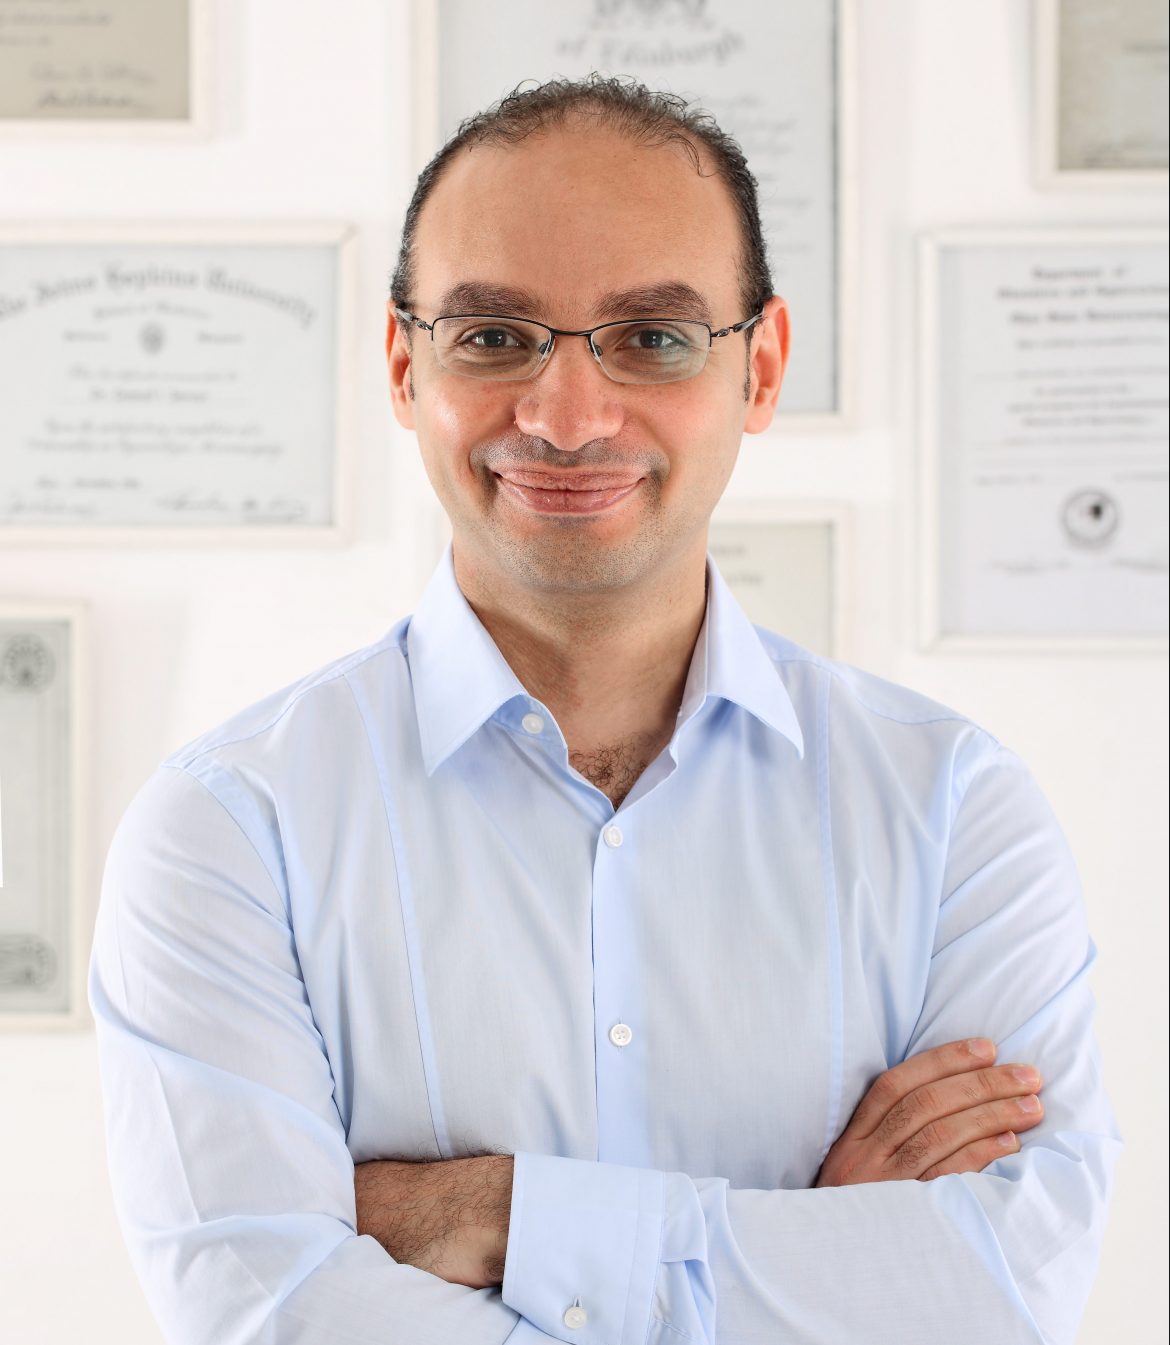 Dr. Ahmed Serour